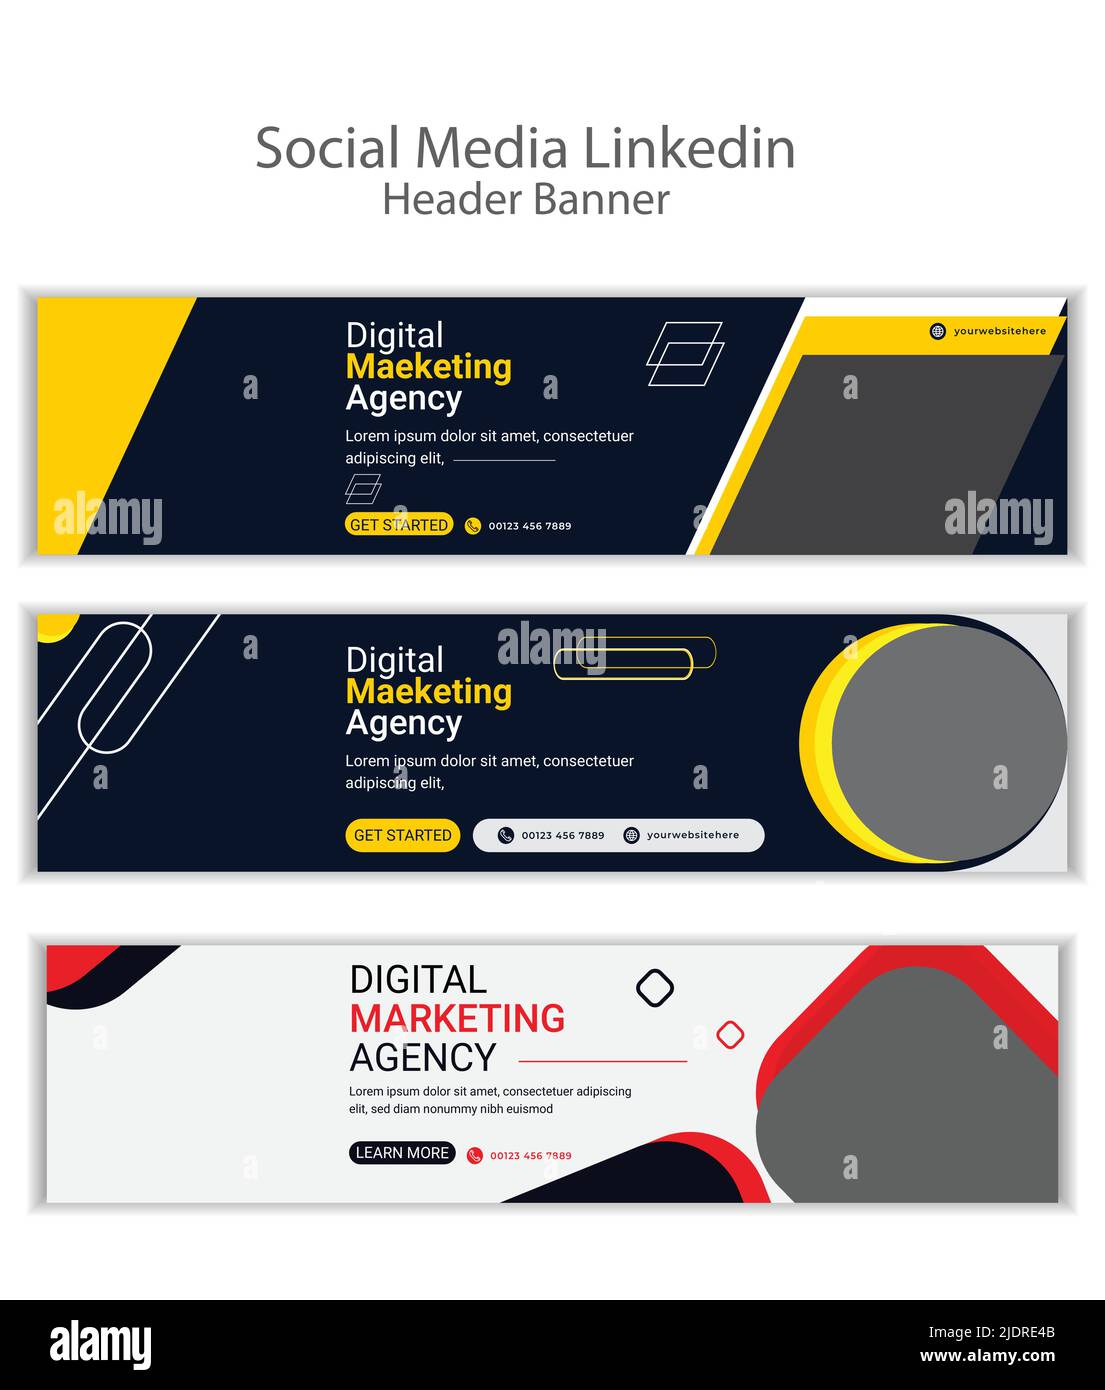 Social media LinkedIn Banner or Cover photo For Digital Marketing Agency Stock Vector